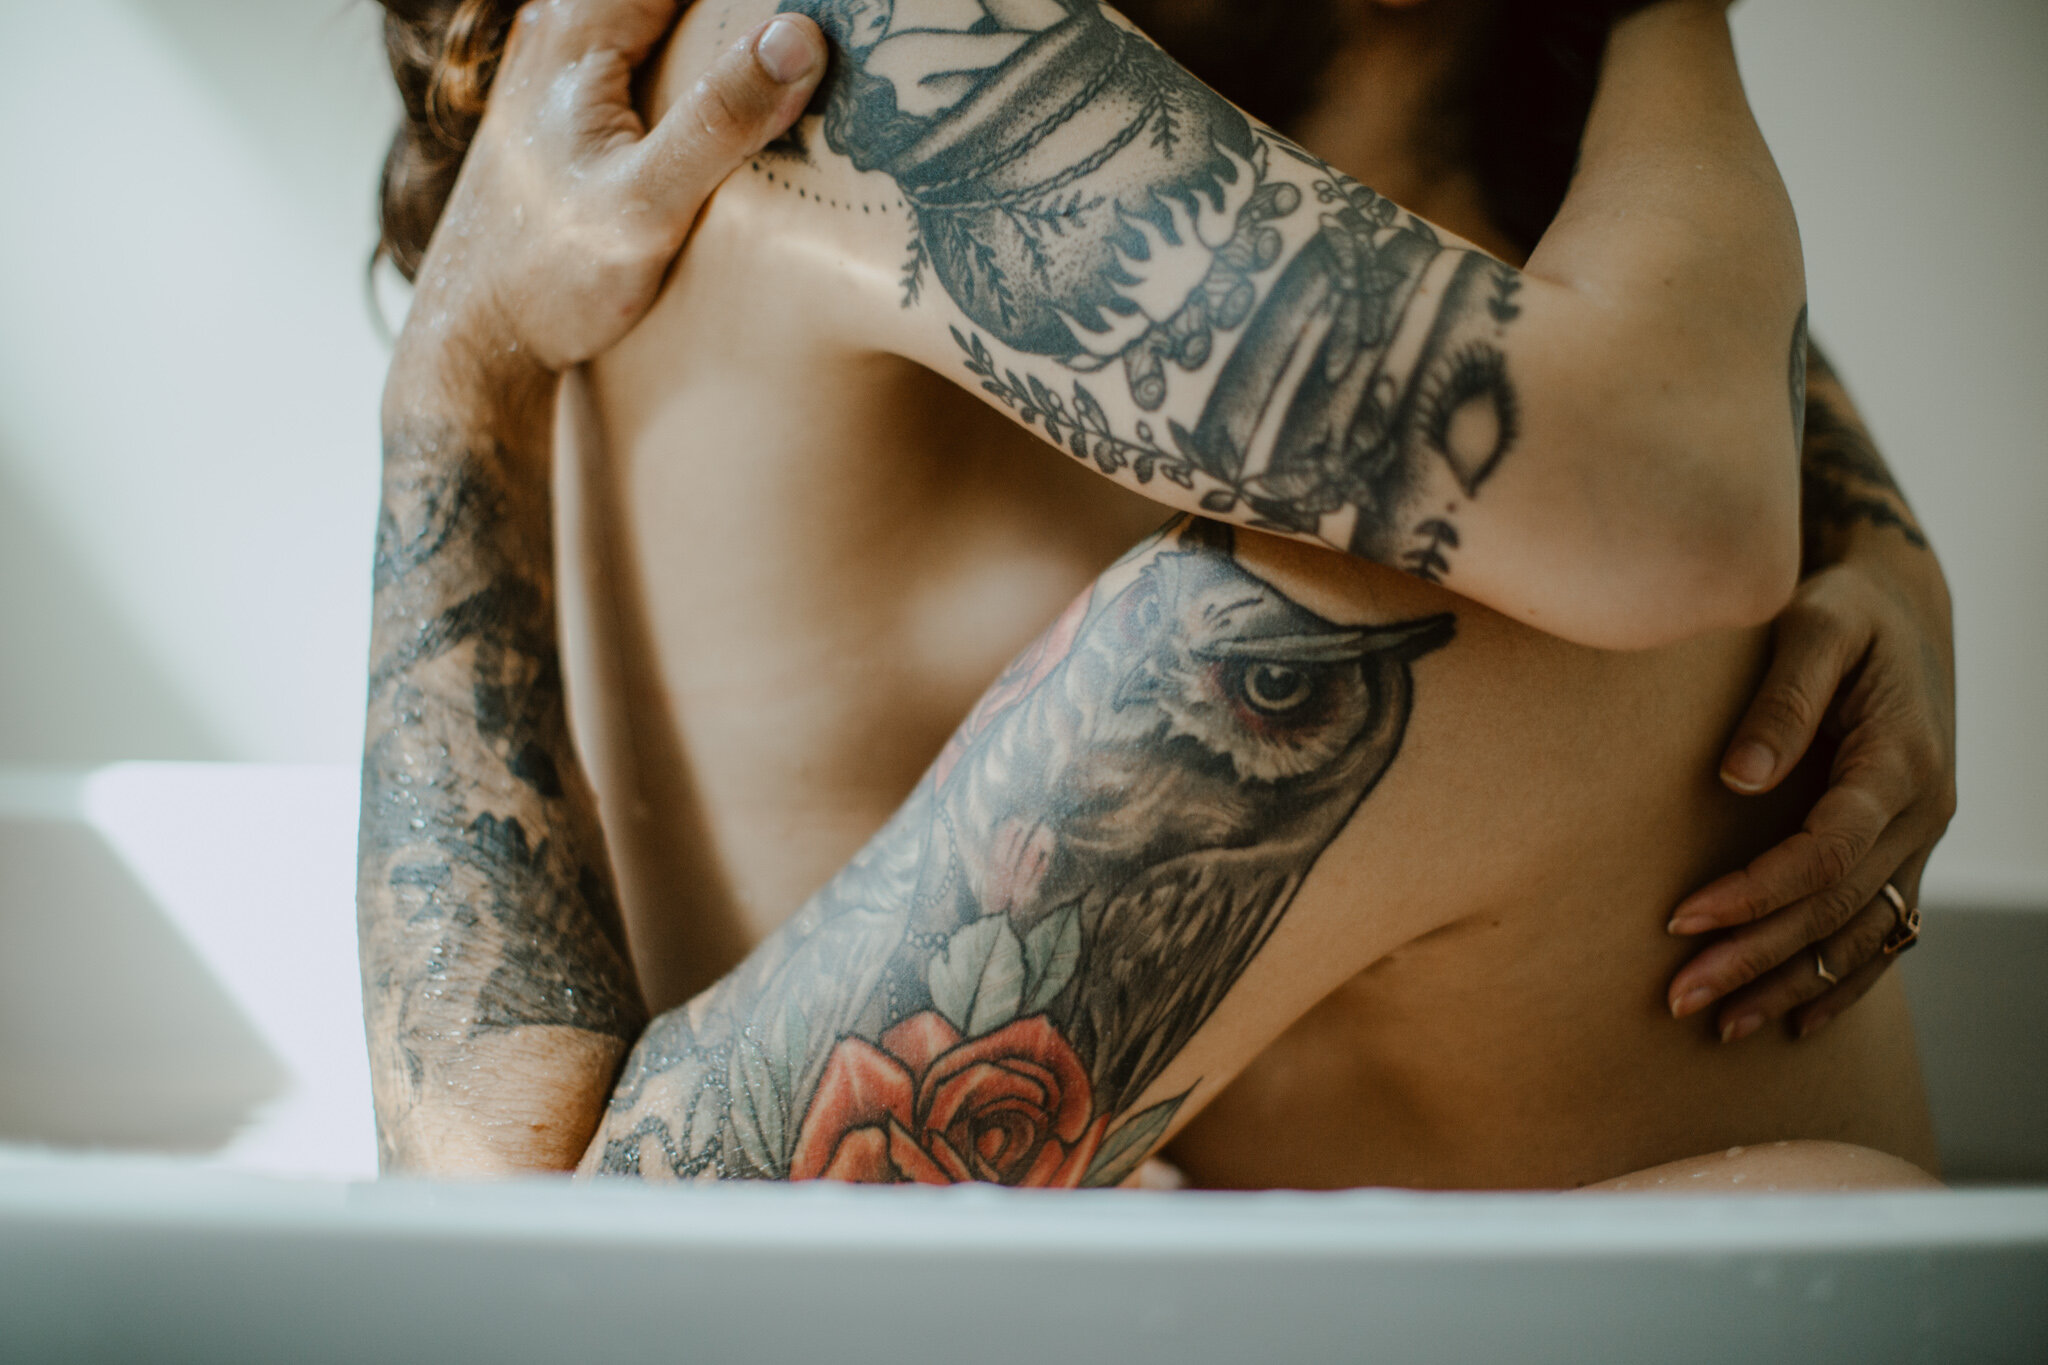 Boudoir tattooed couple in tub